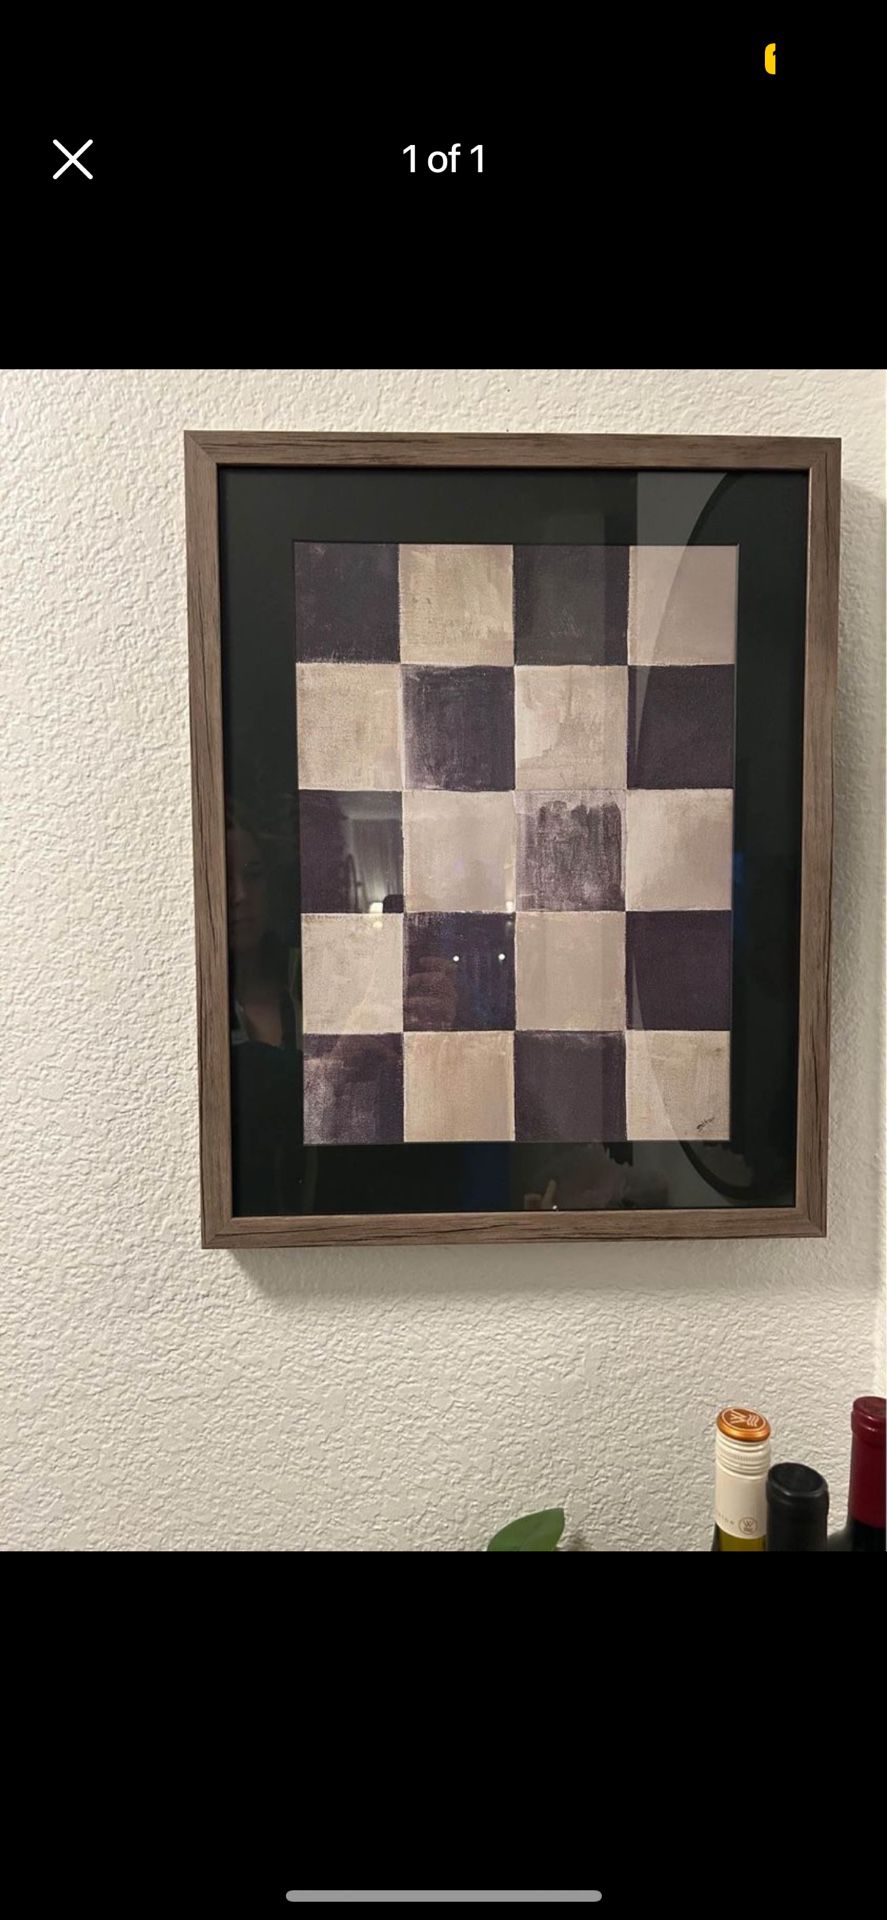 Framed Checkerboard Print 